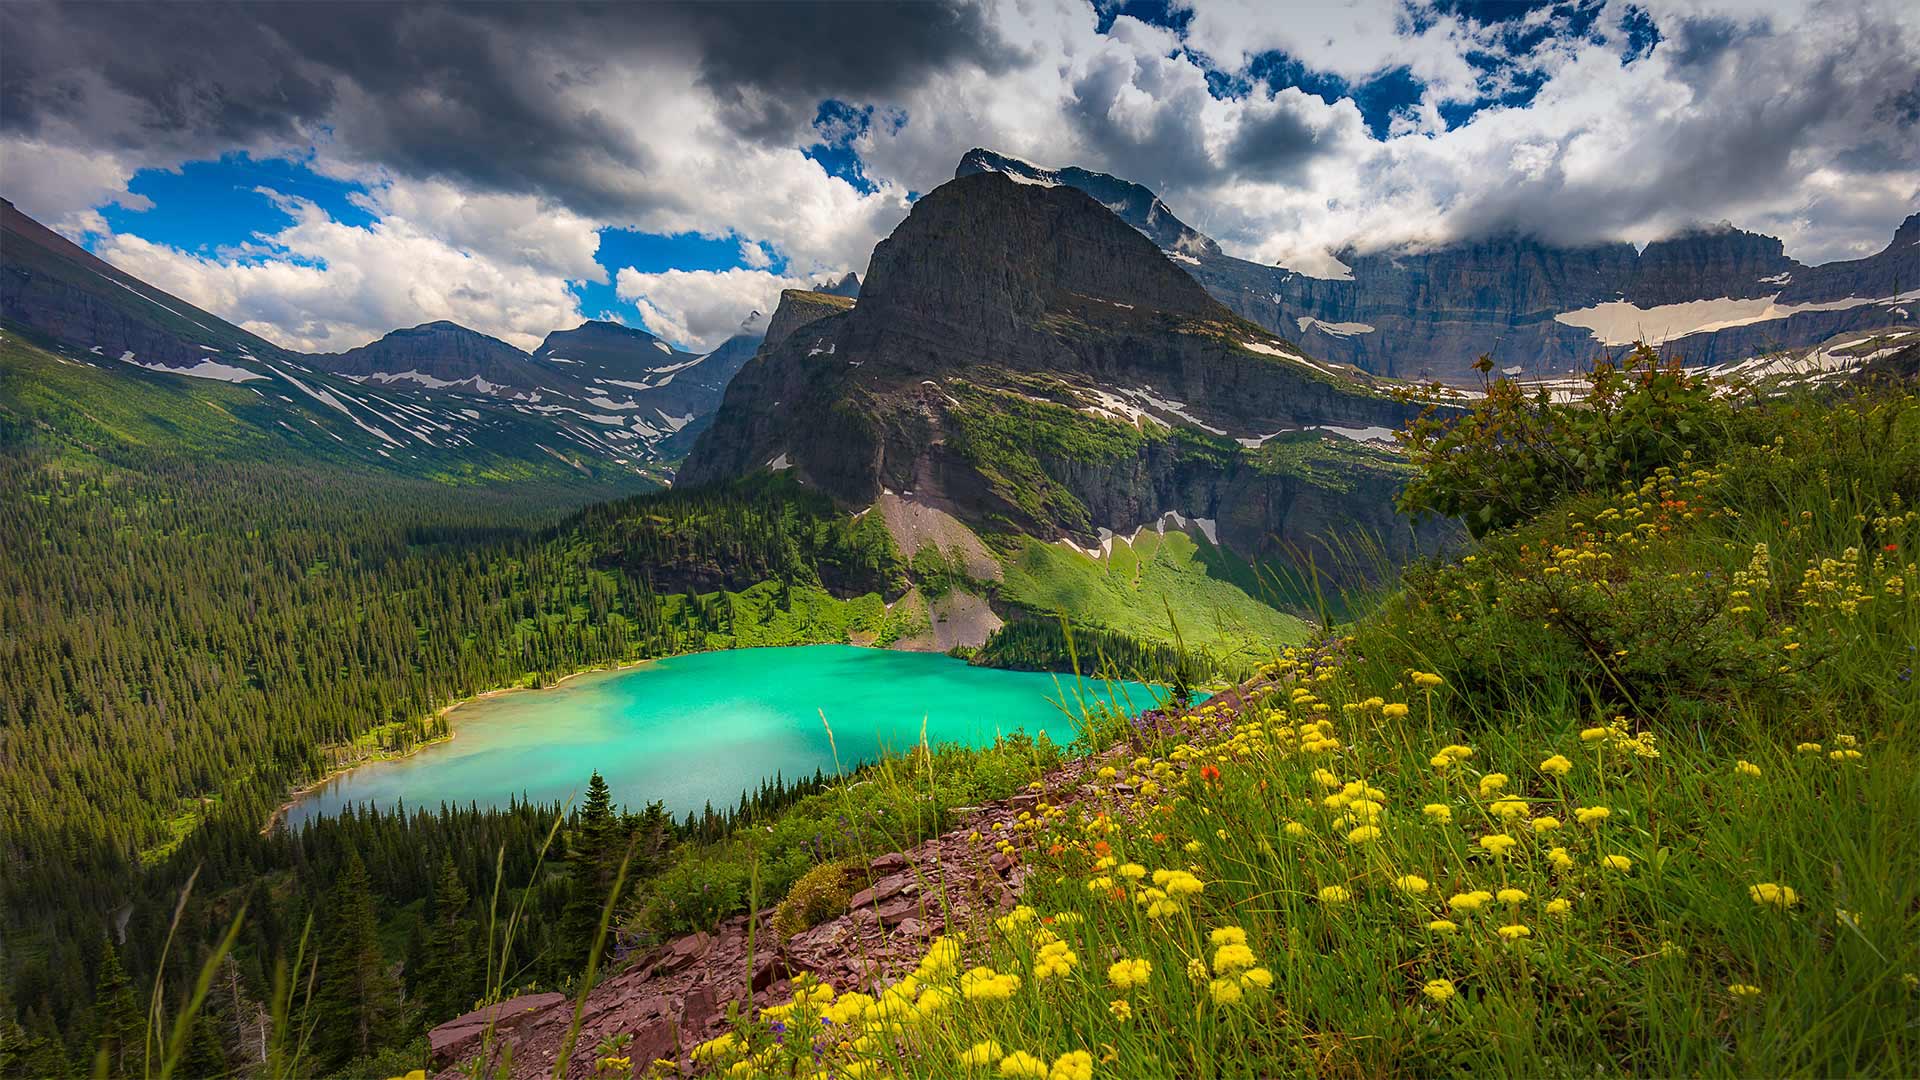 Grinnell Lake, Glacier National Park, Montana - Pung/Shutterstock)